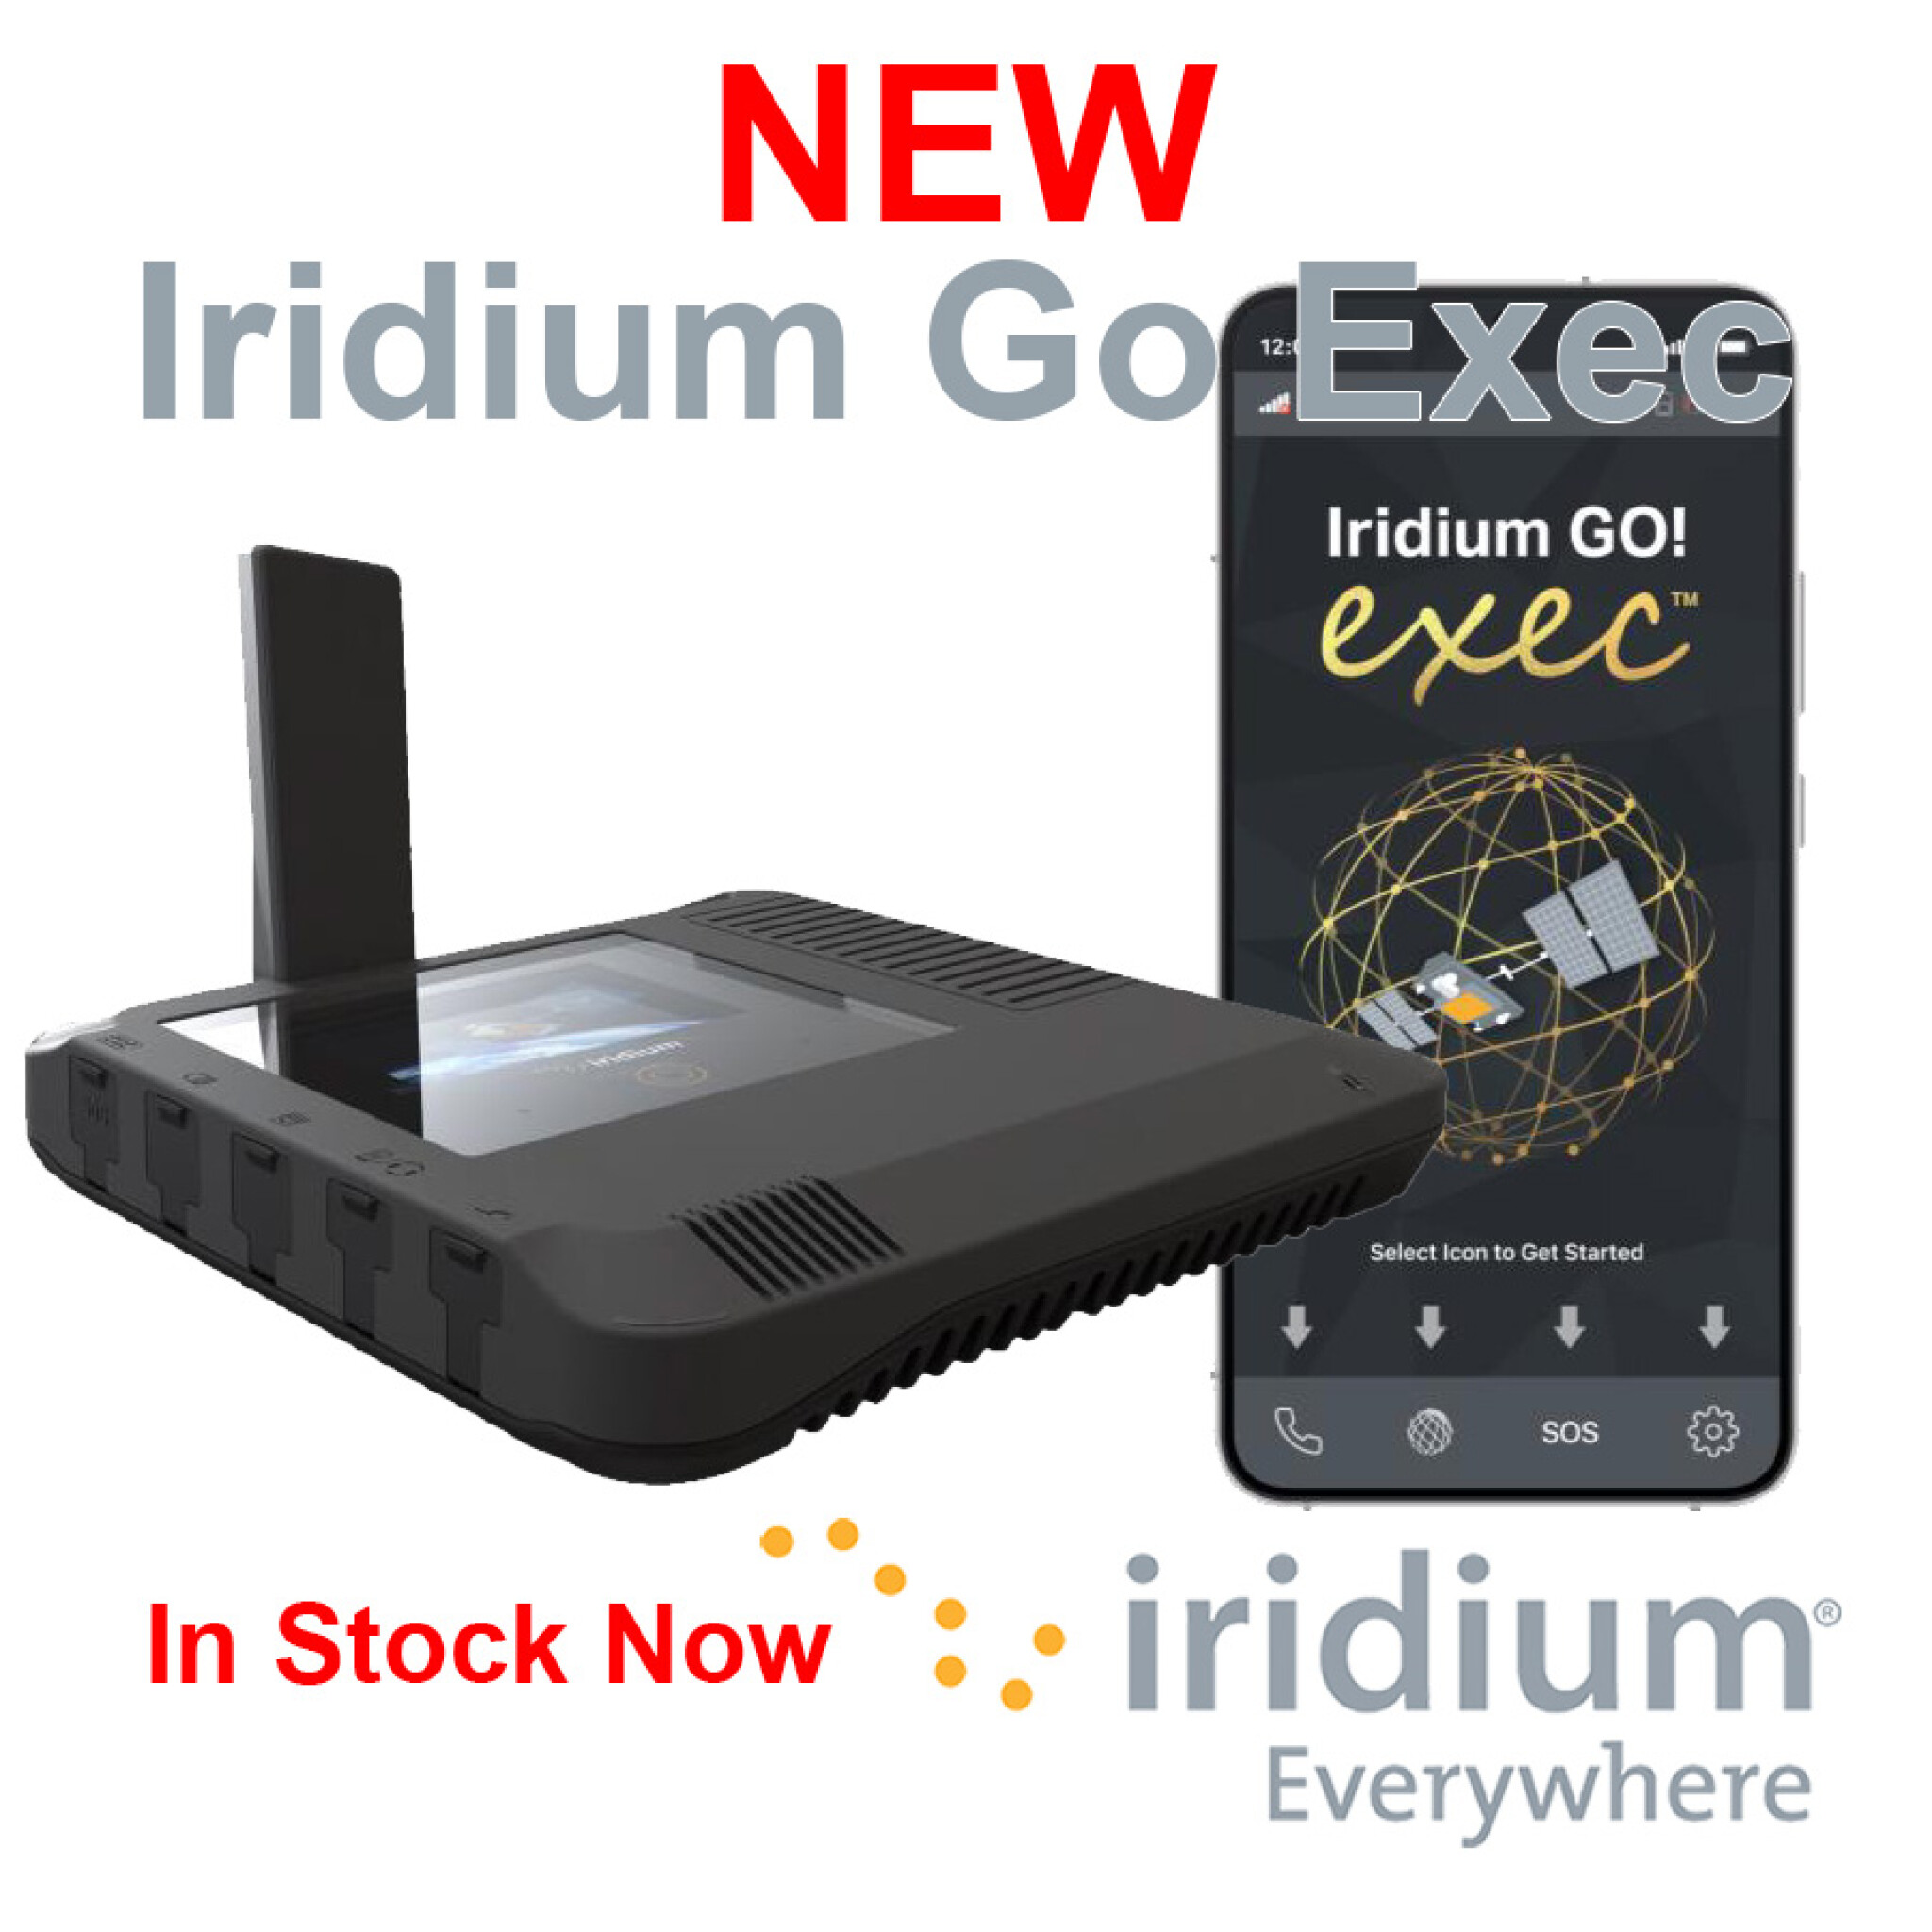 Iridium Go Exec.jpg